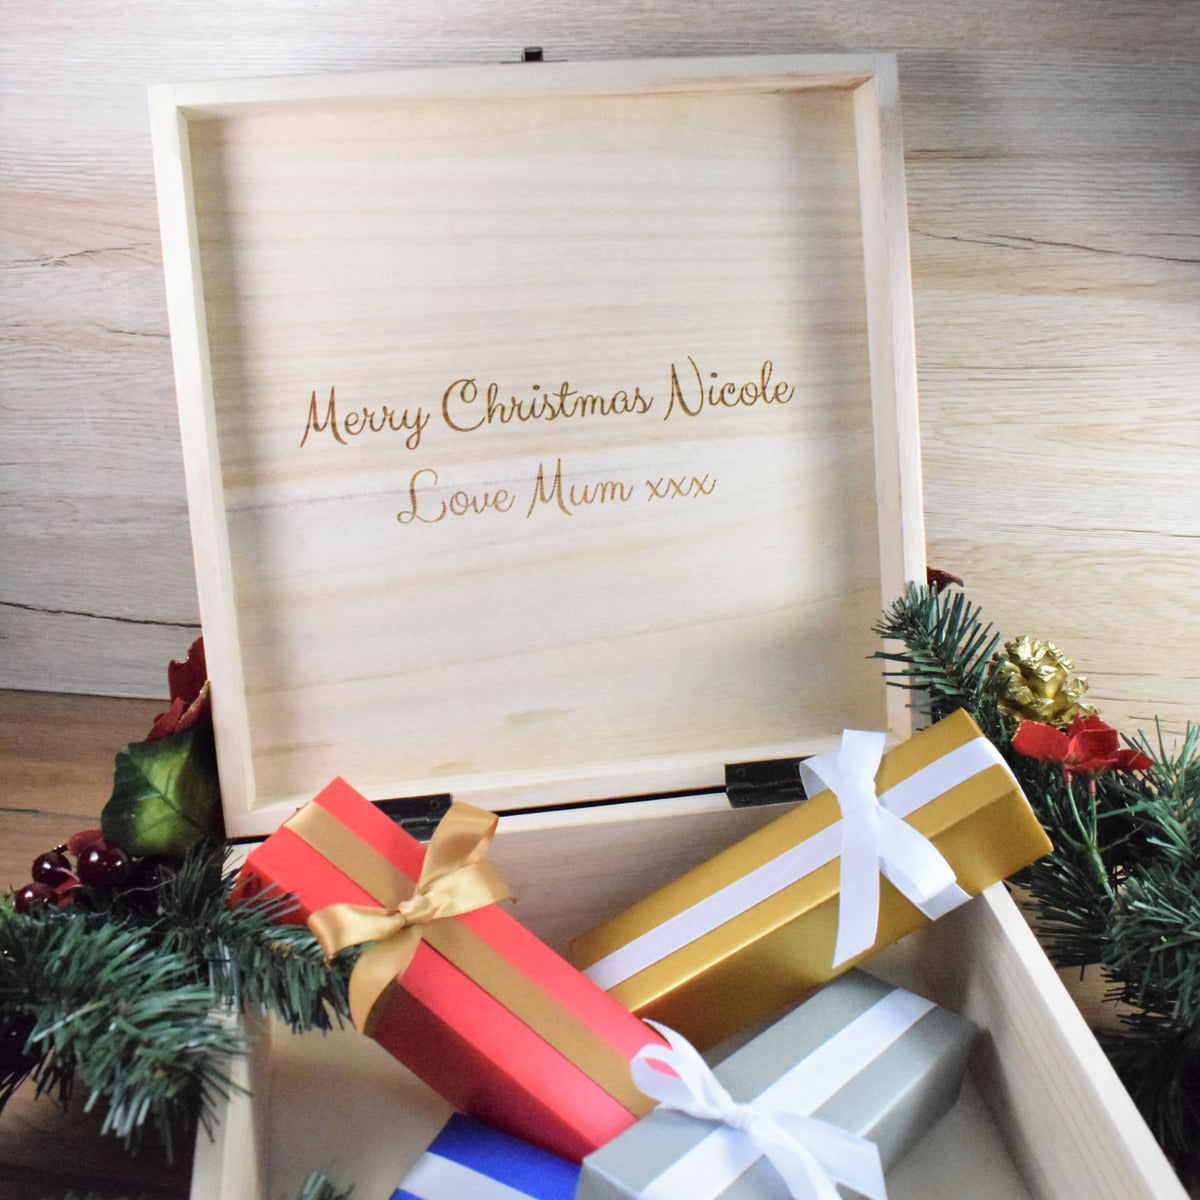 Personalised Printed Wooden Christmas Eve Box - Santa & Friends